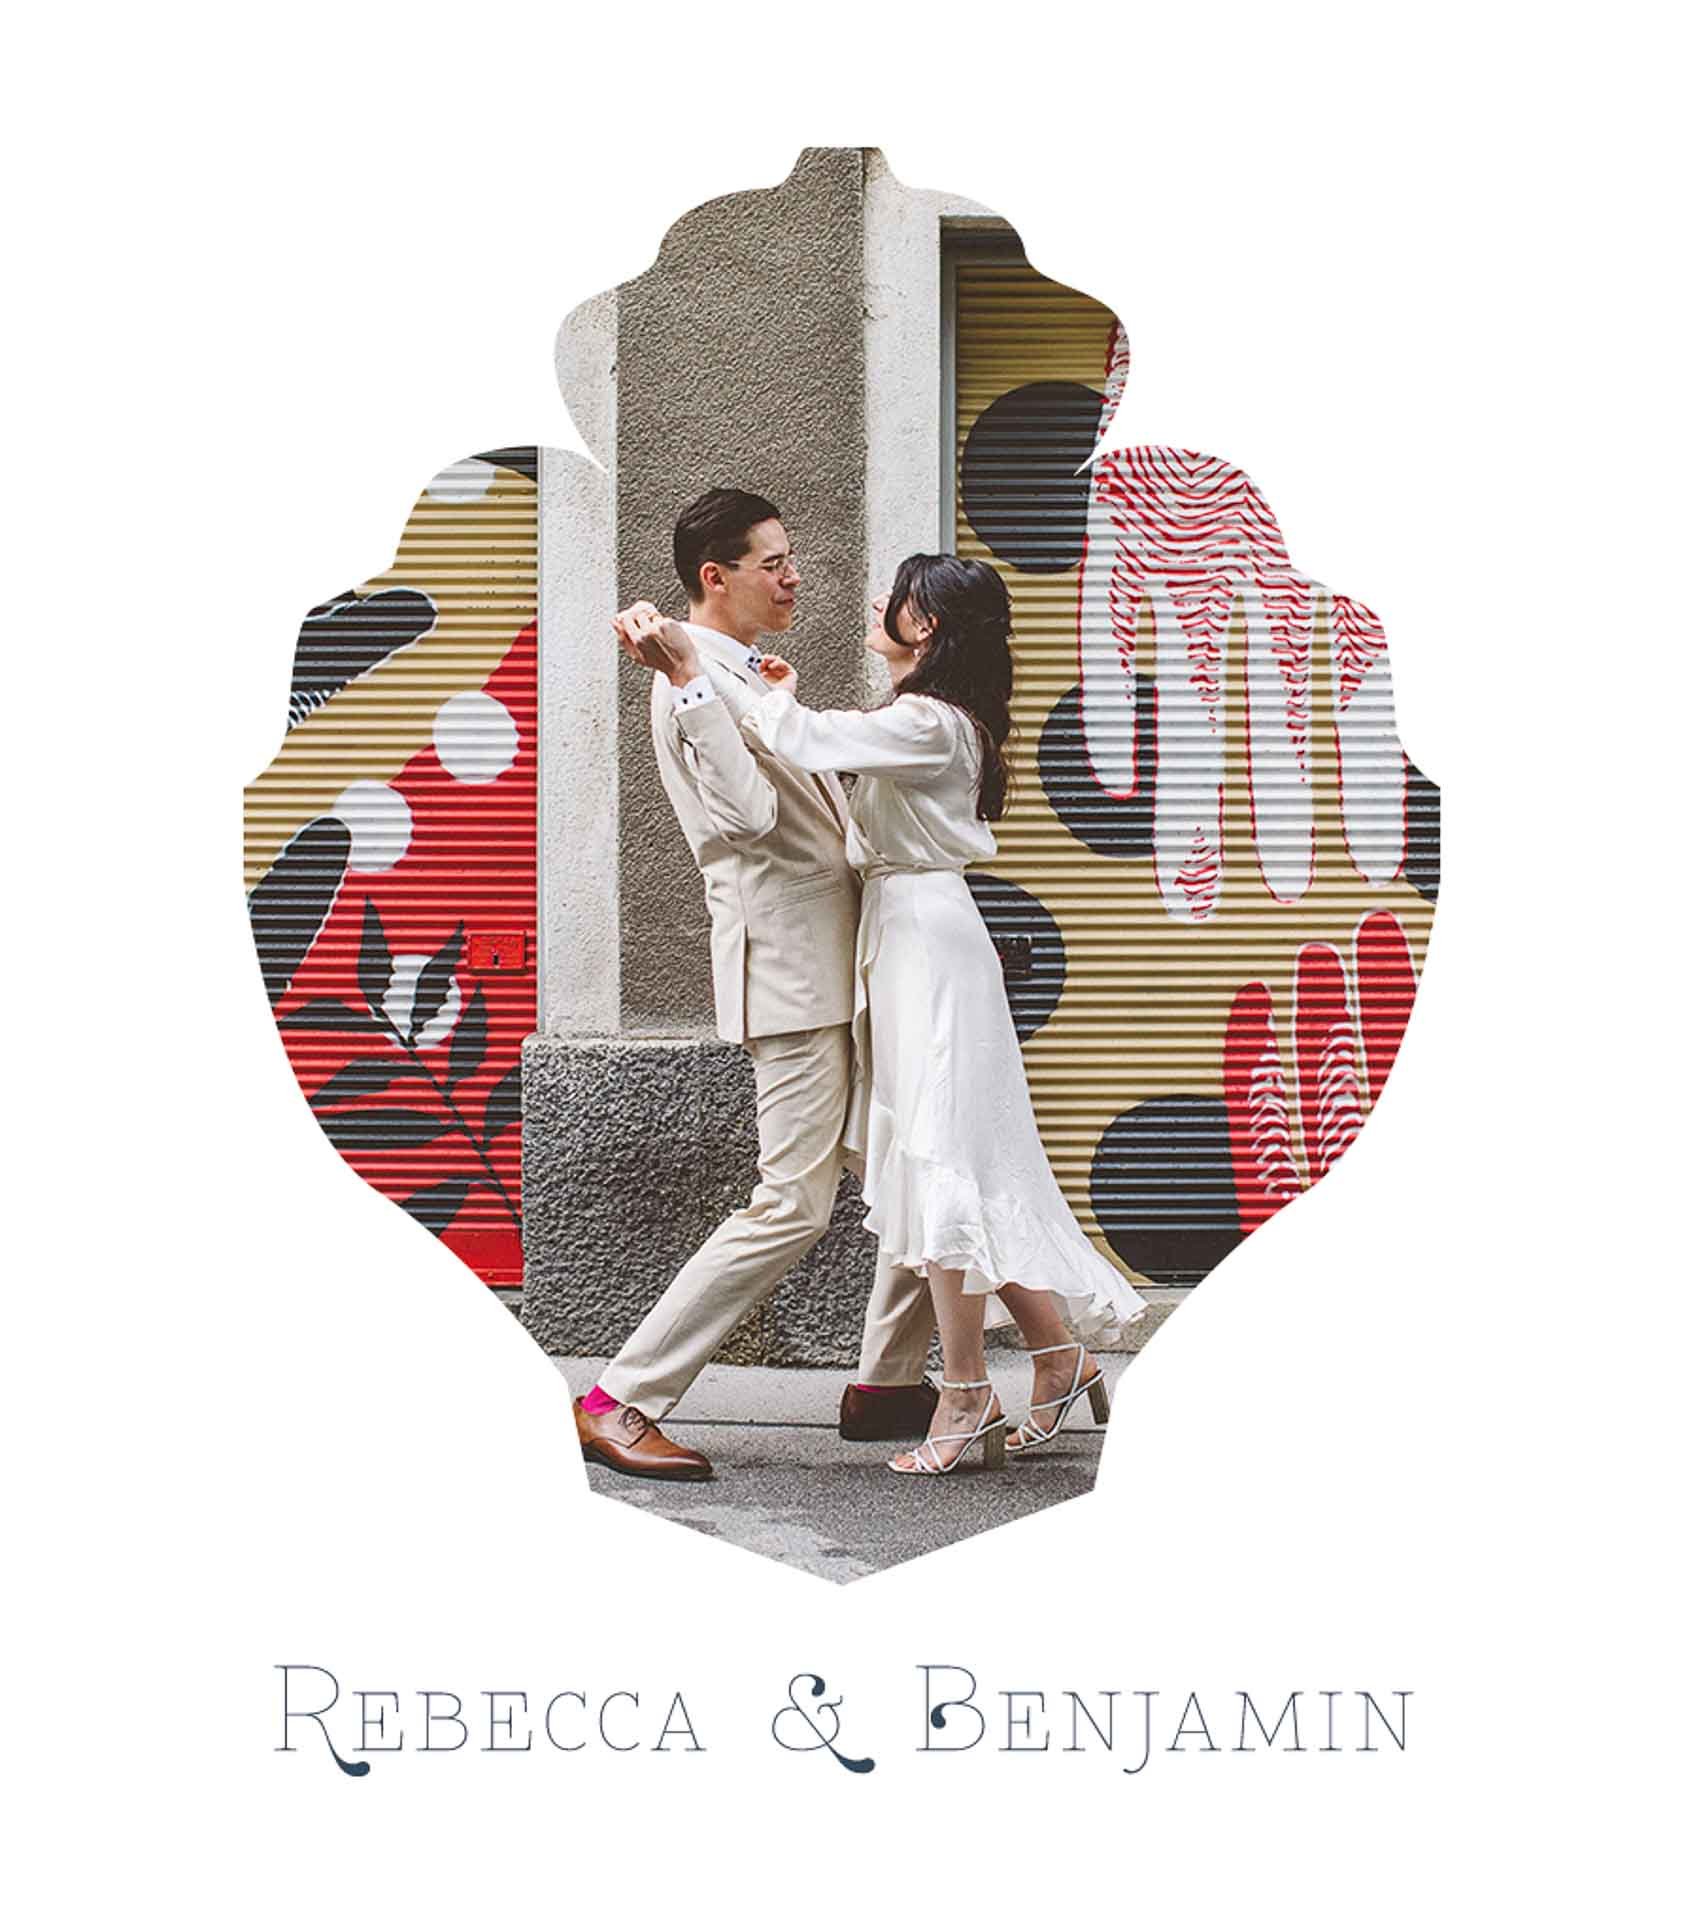 Rebecca&Benjamin2_©MitFedern&Posaunen_Hochzeitsfotografie.jpg